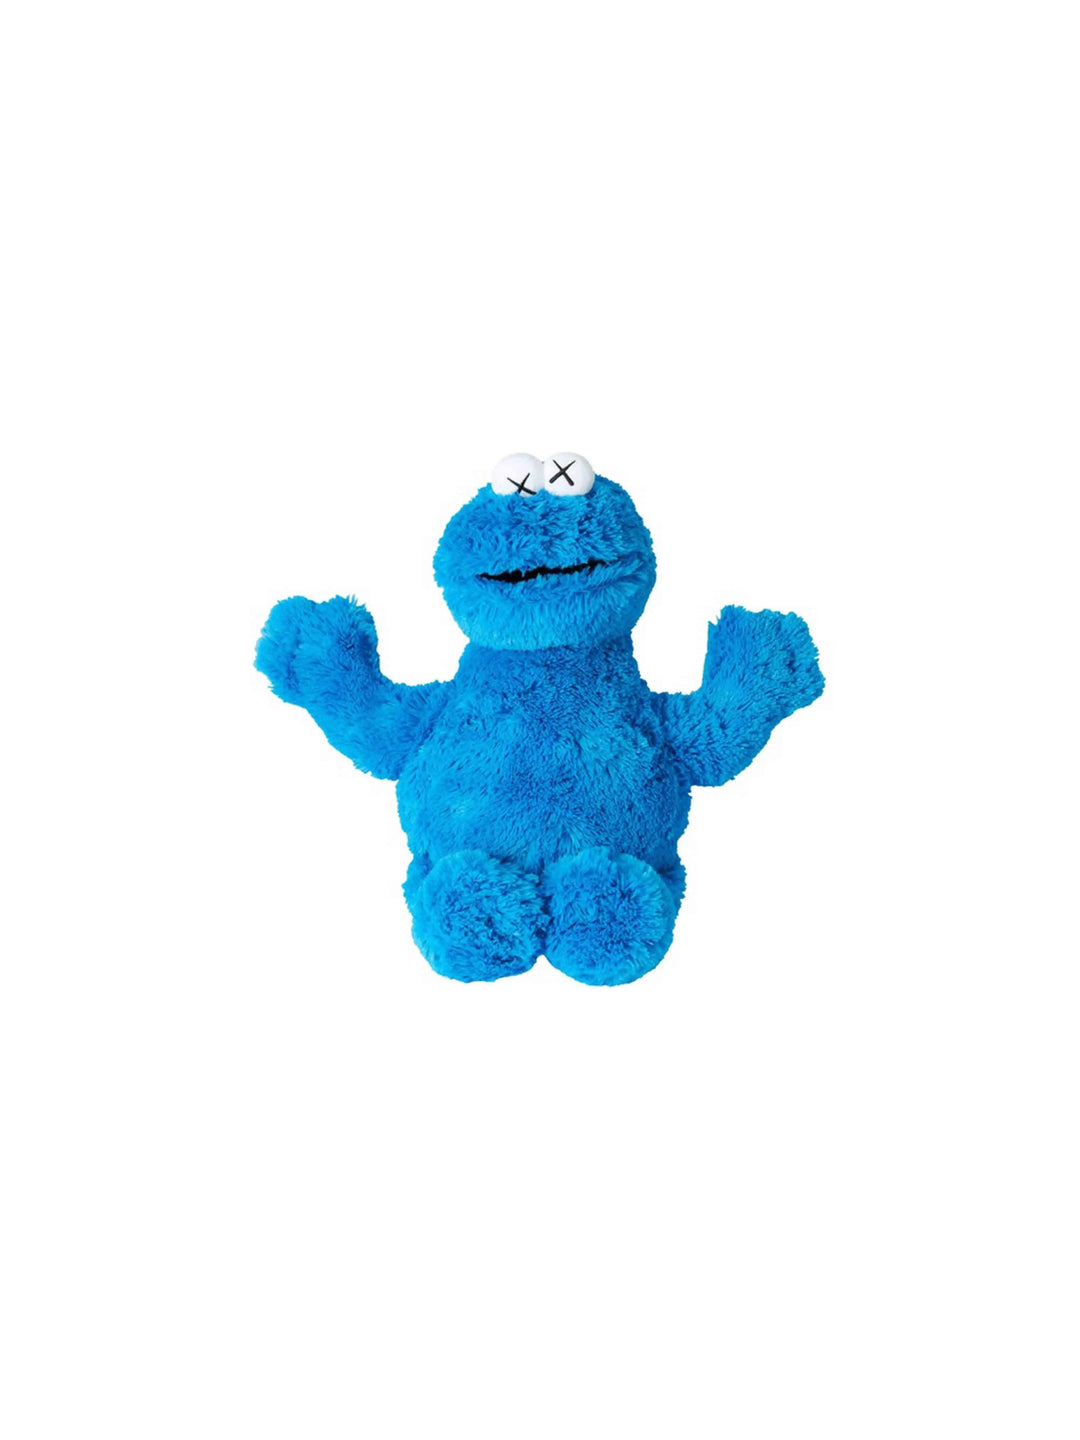 KAWS Sesame Street Uniqlo Cookie Monster Plush Blue Prior